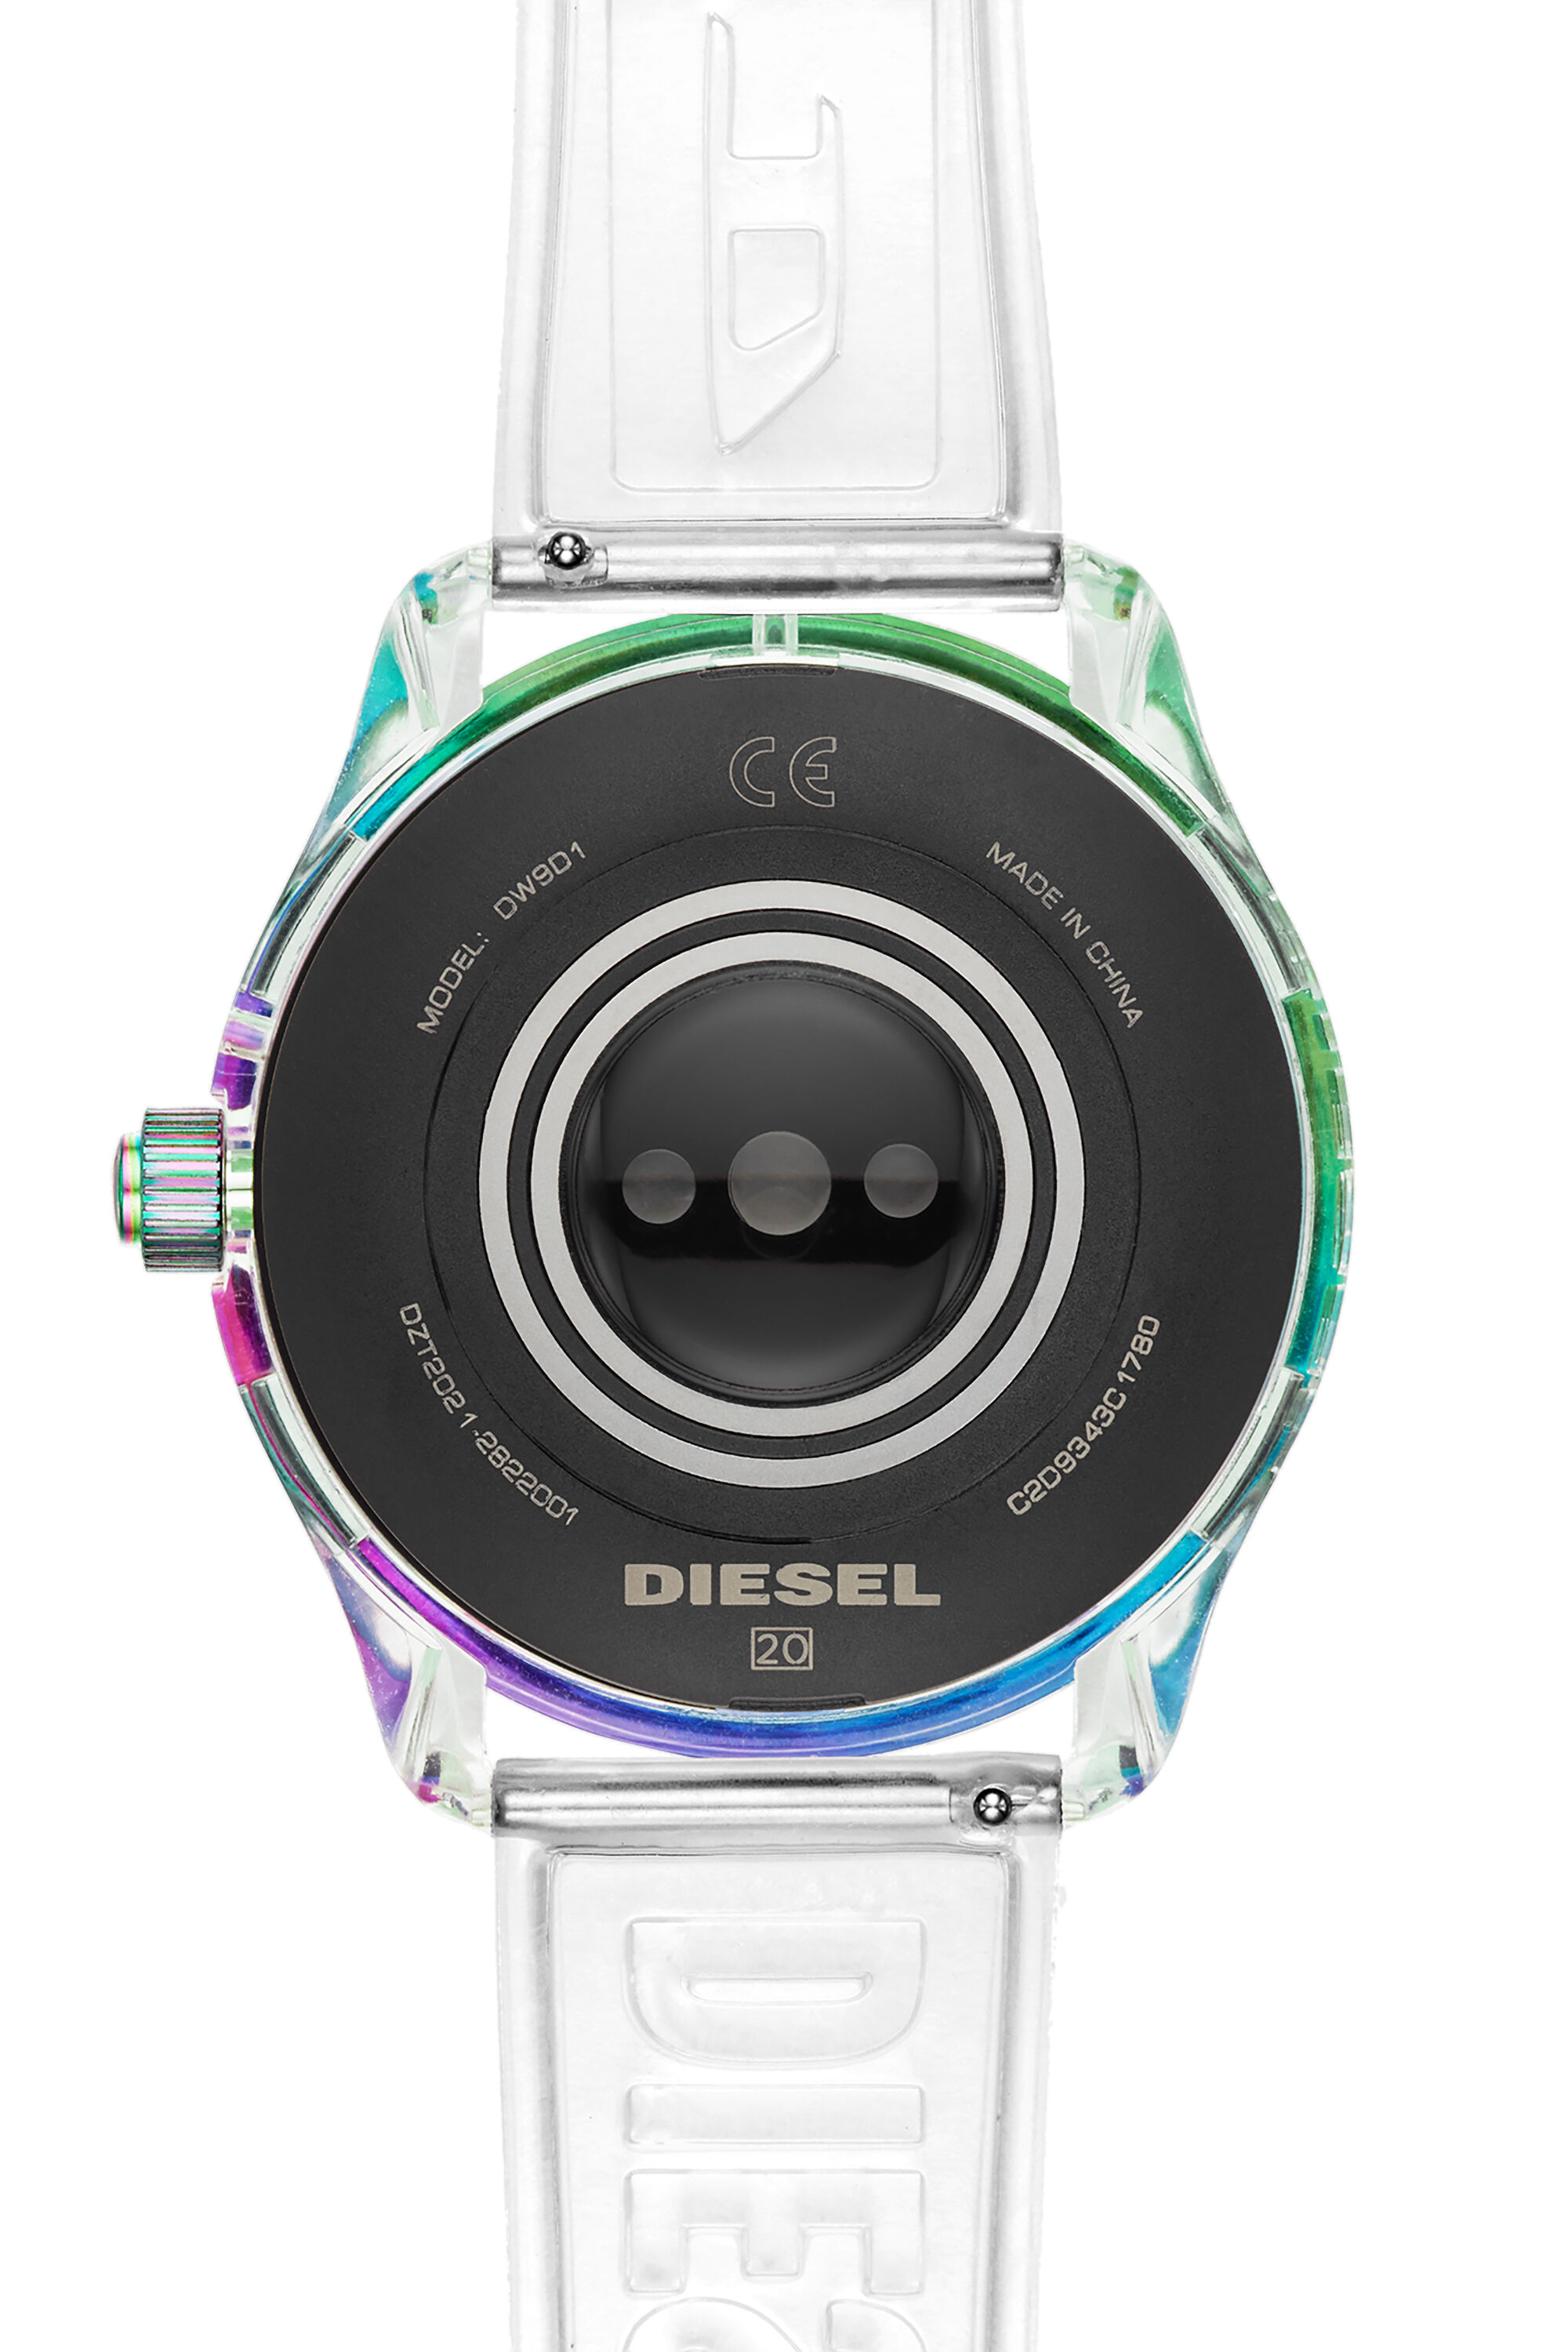 Diesel - DT2021, White - Image 4